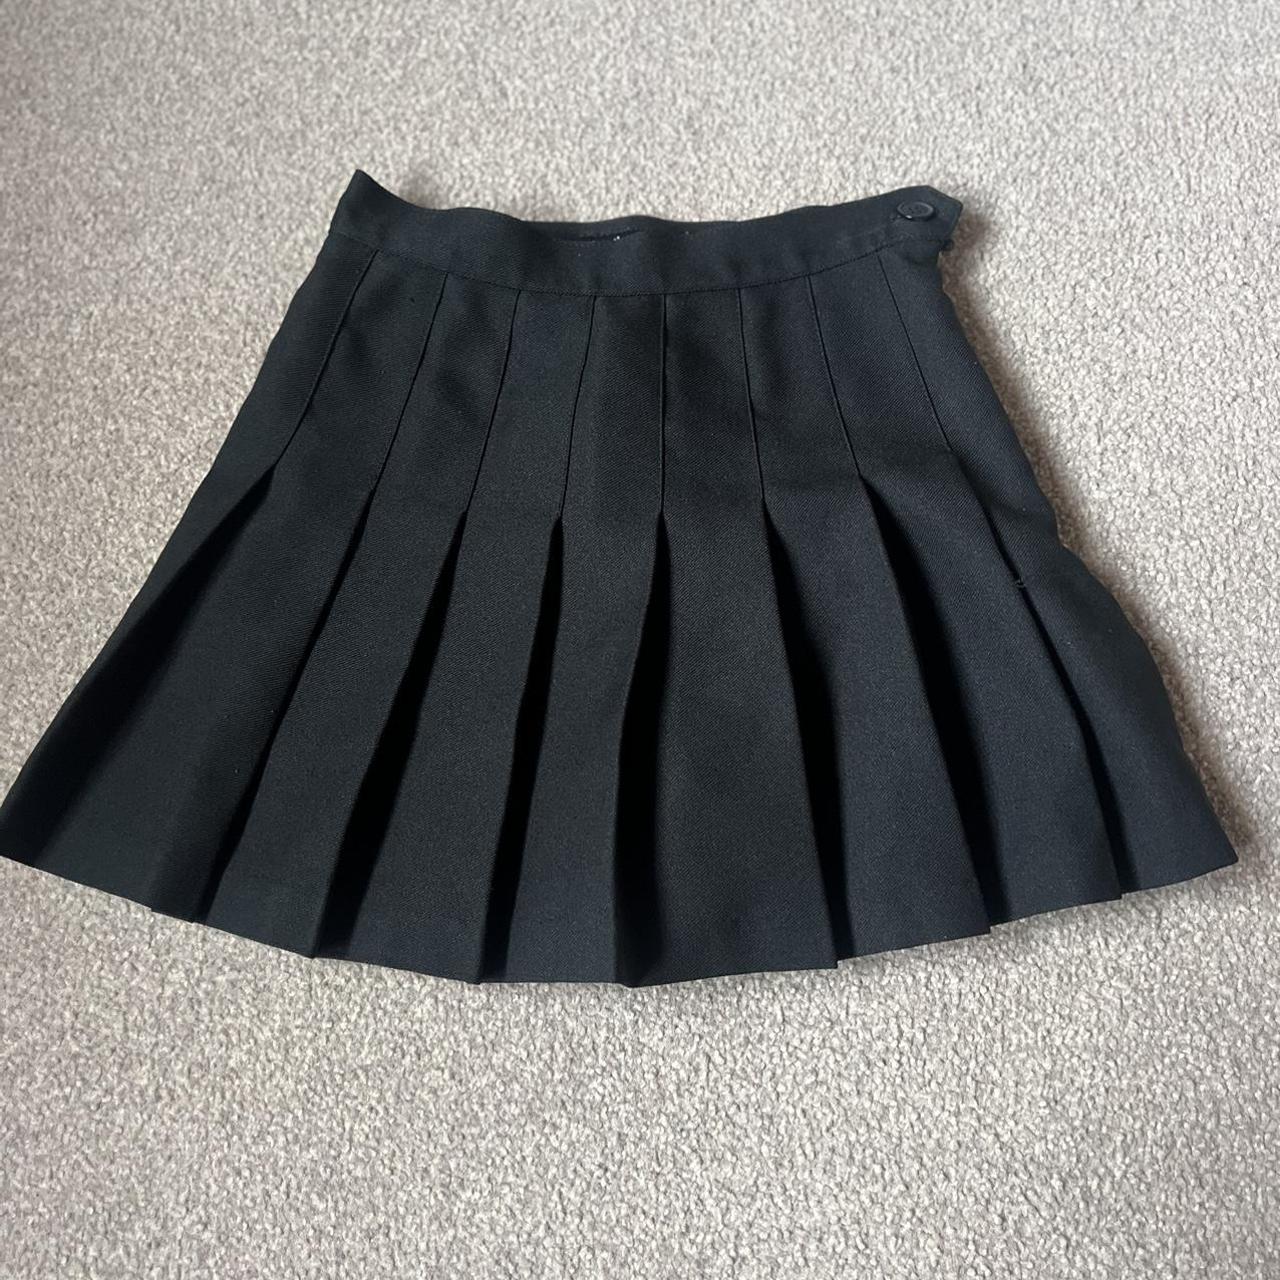 American Apparel black pleated mini skirt Great... - Depop